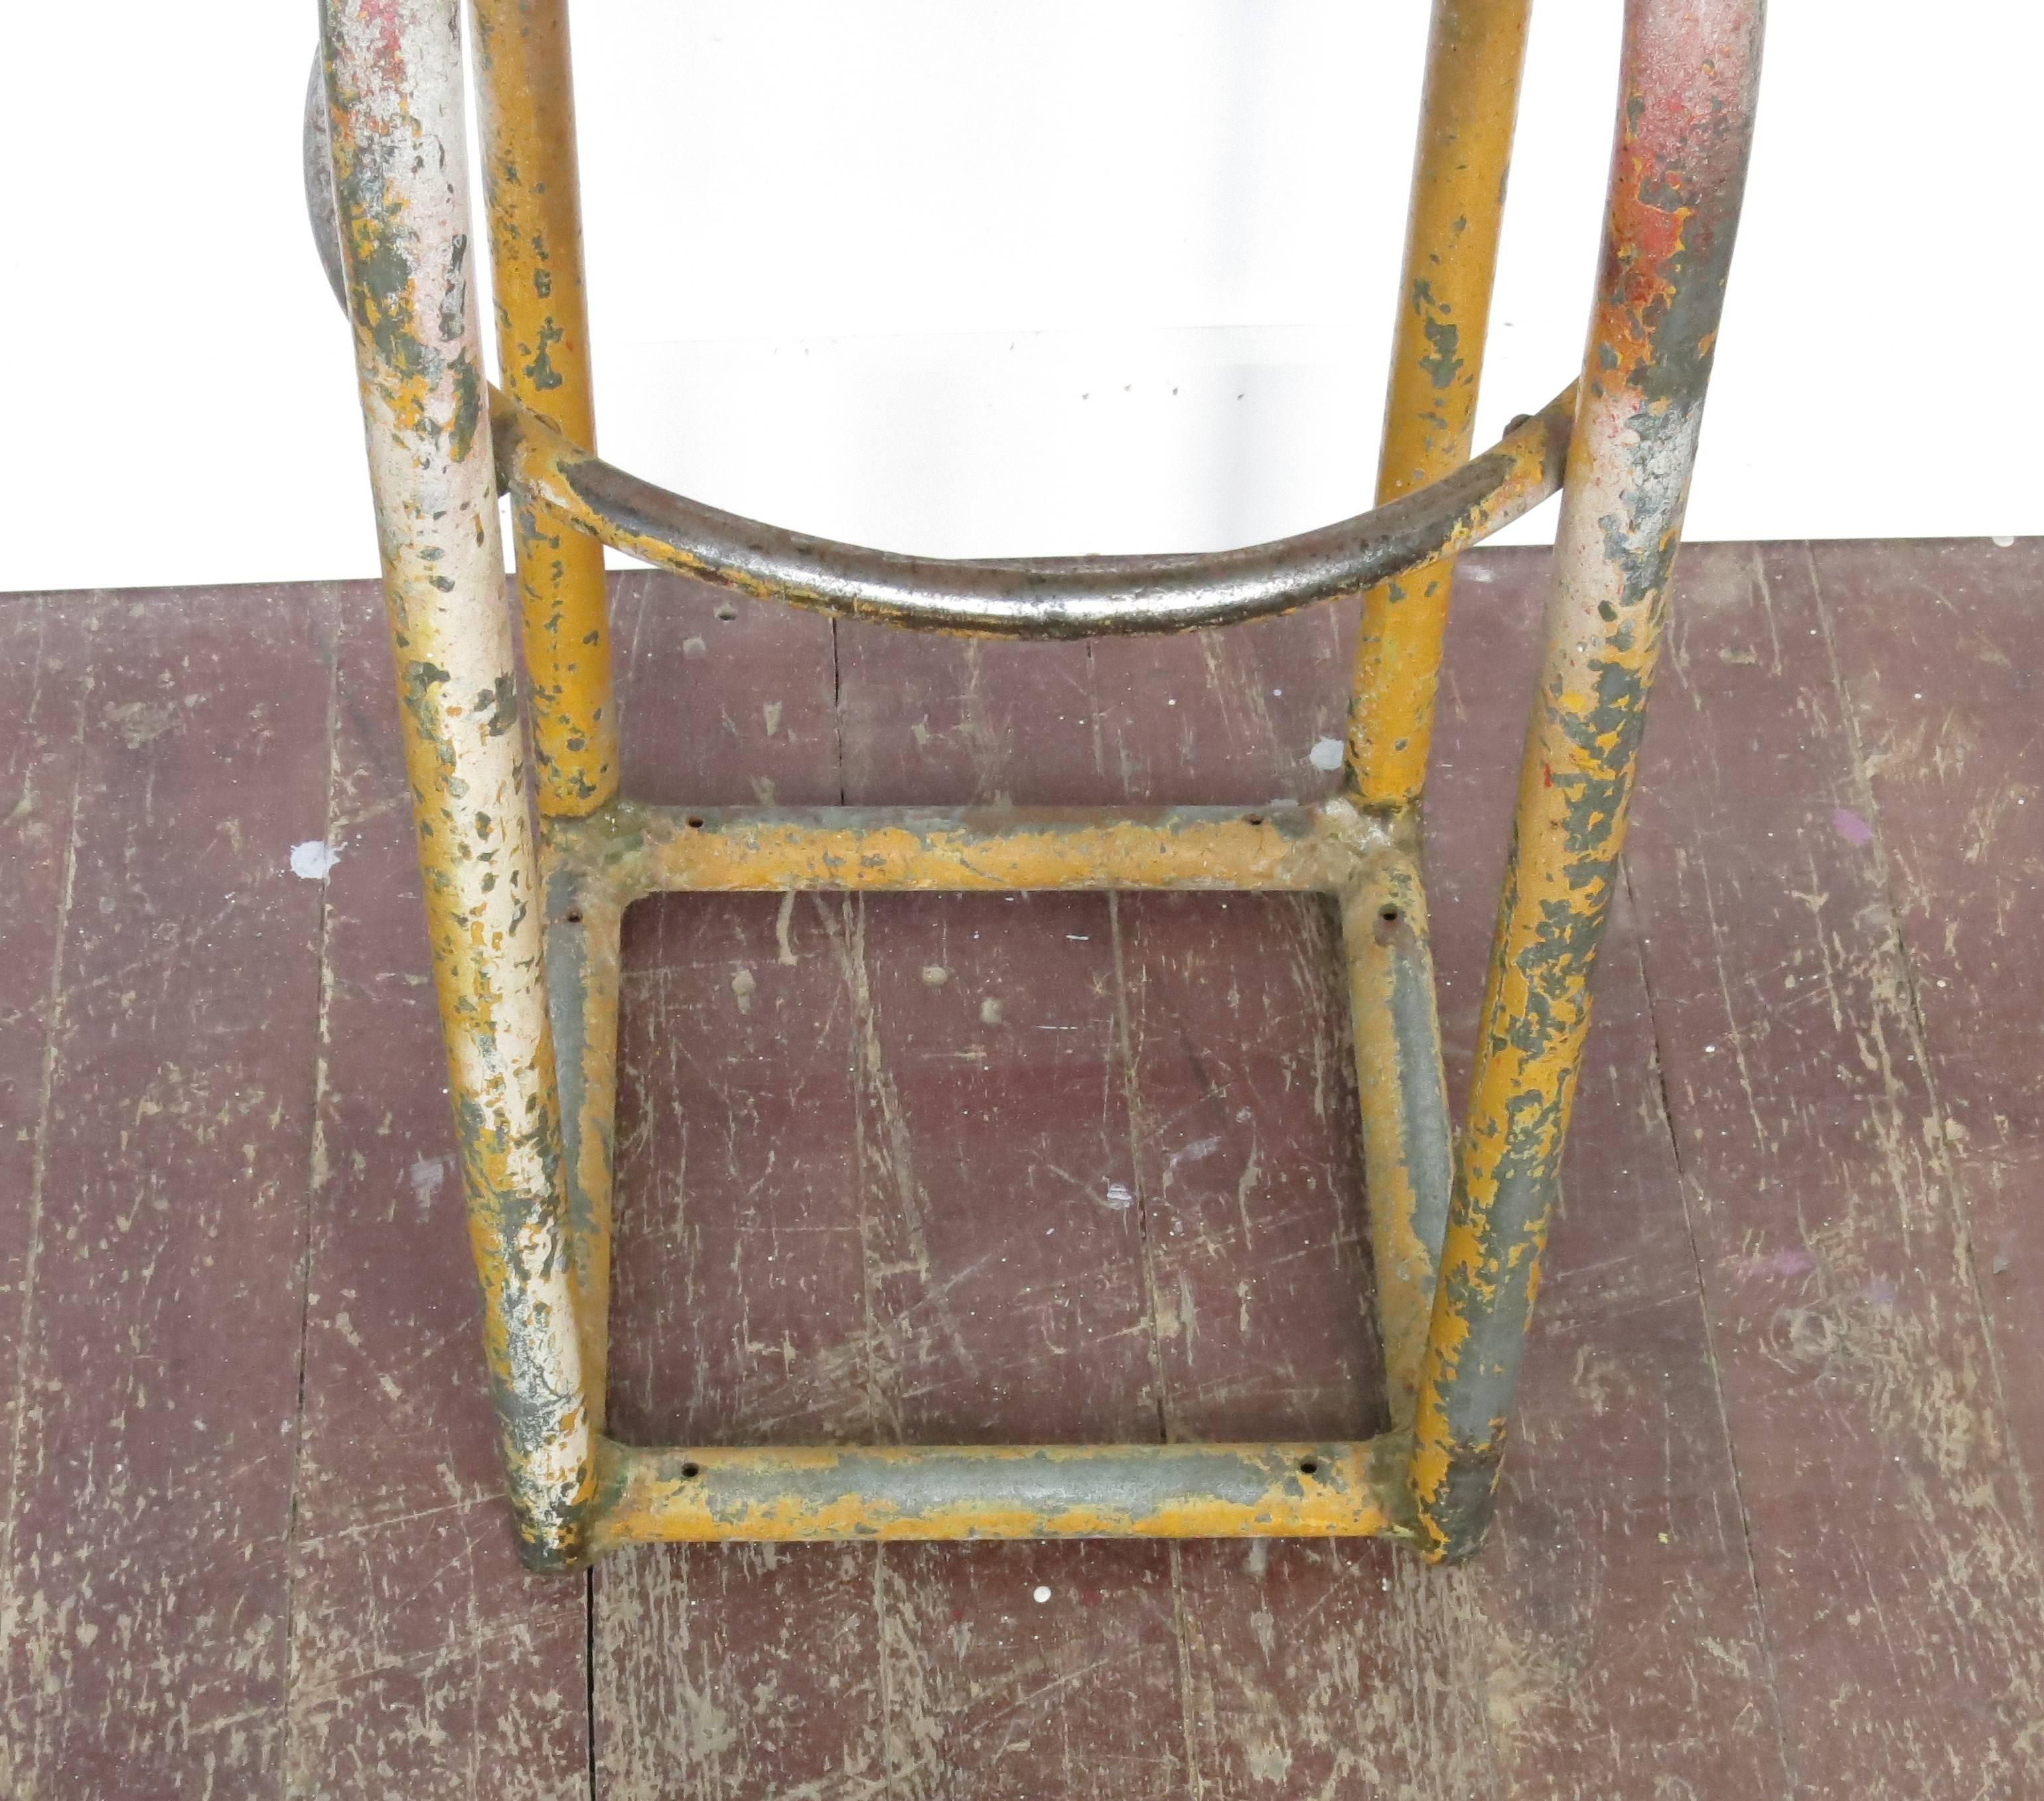 vintage metal stool